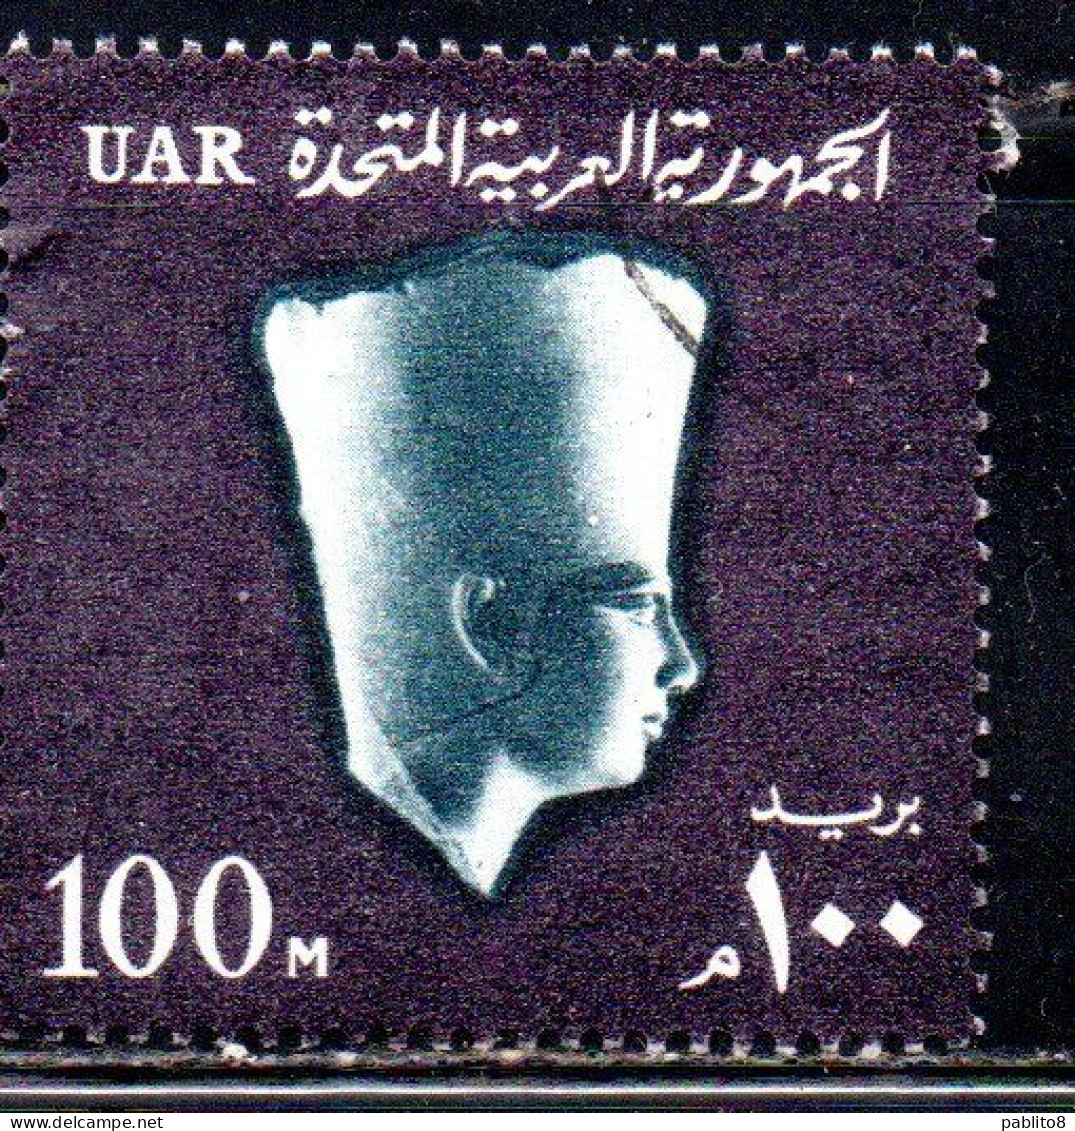 UAR EGYPT EGITTO 1964 1967 PHARAOH USERKAF 5th DYNASTY 100m USED USATO OBLITERE' - Used Stamps